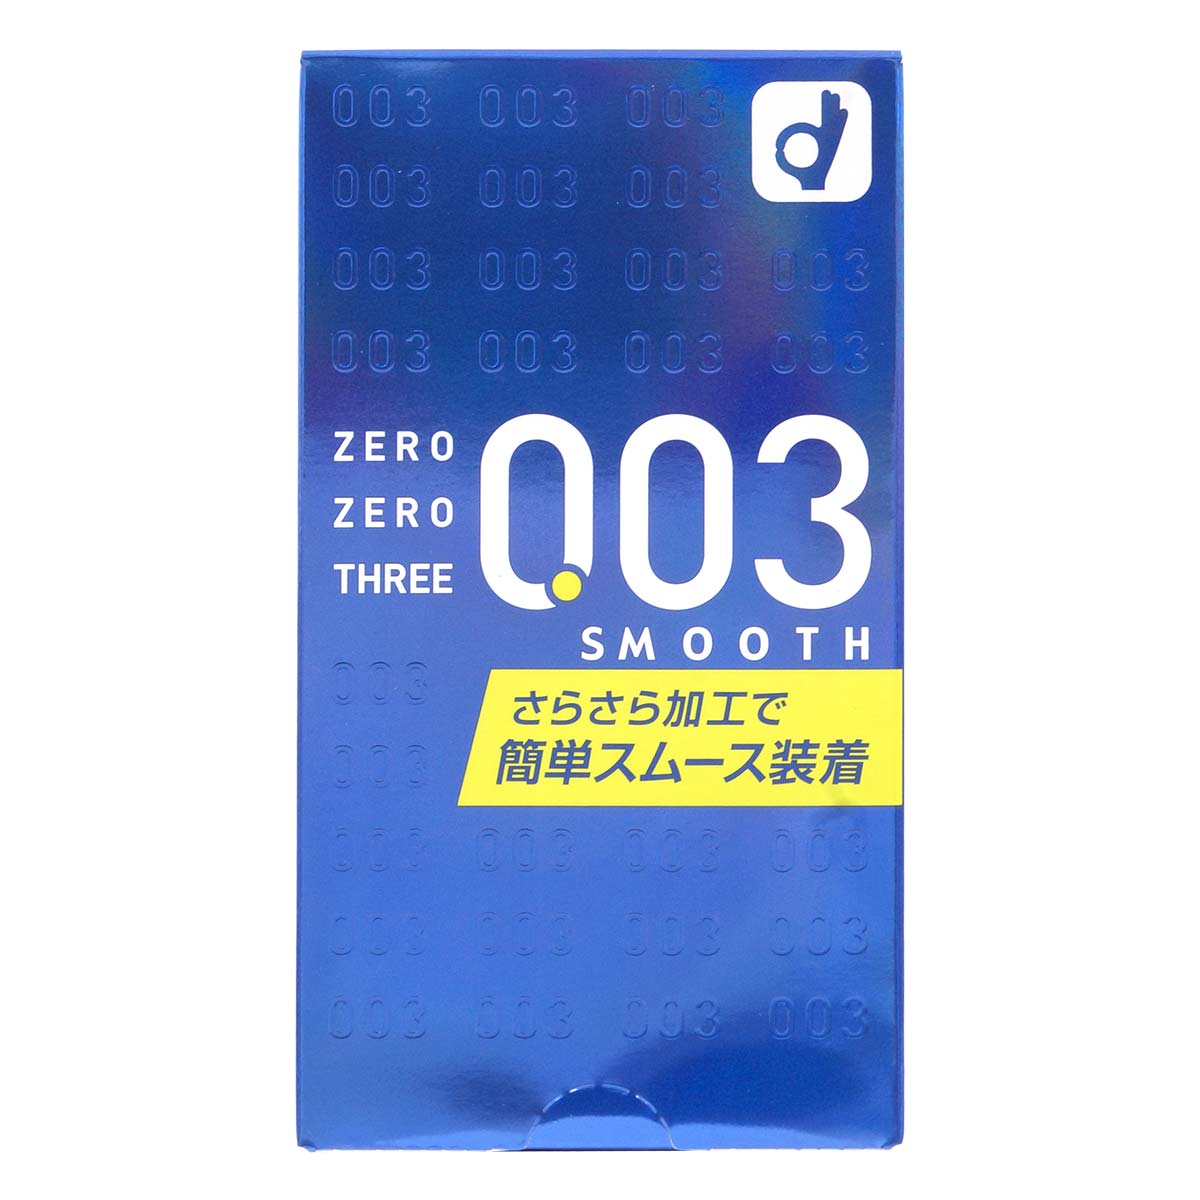 Zero Zero Three 0.03 Smooth (Japan Edition) 10's Pack Latex Condom-p_2